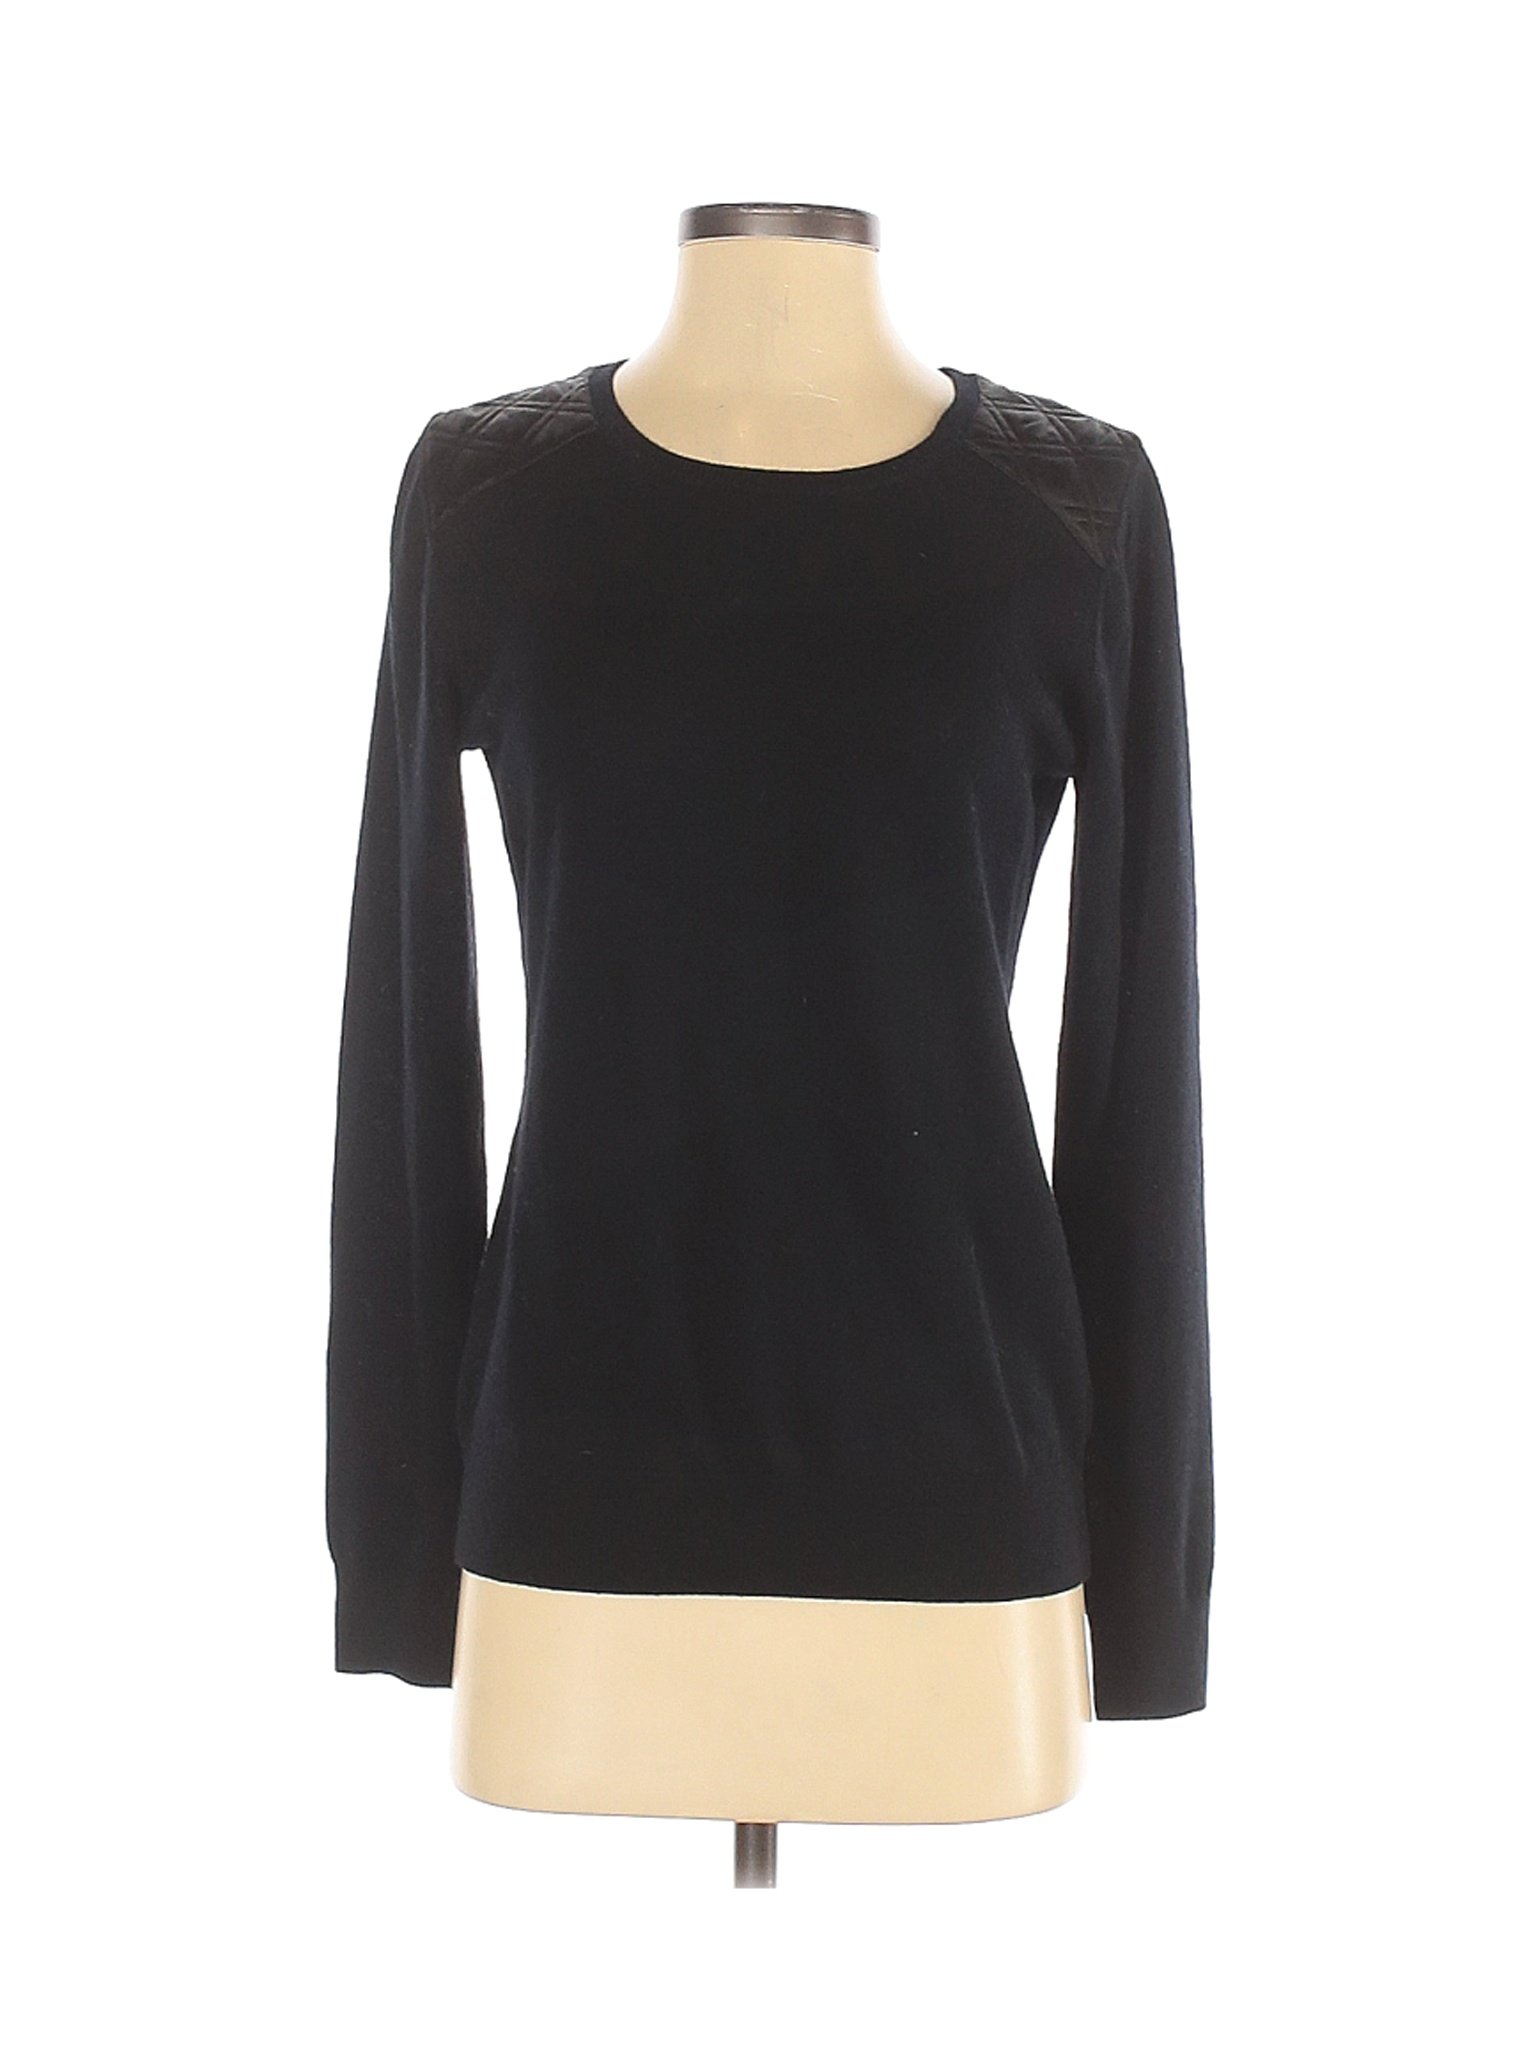 Tahari Women Black Wool Pullover Sweater S | eBay